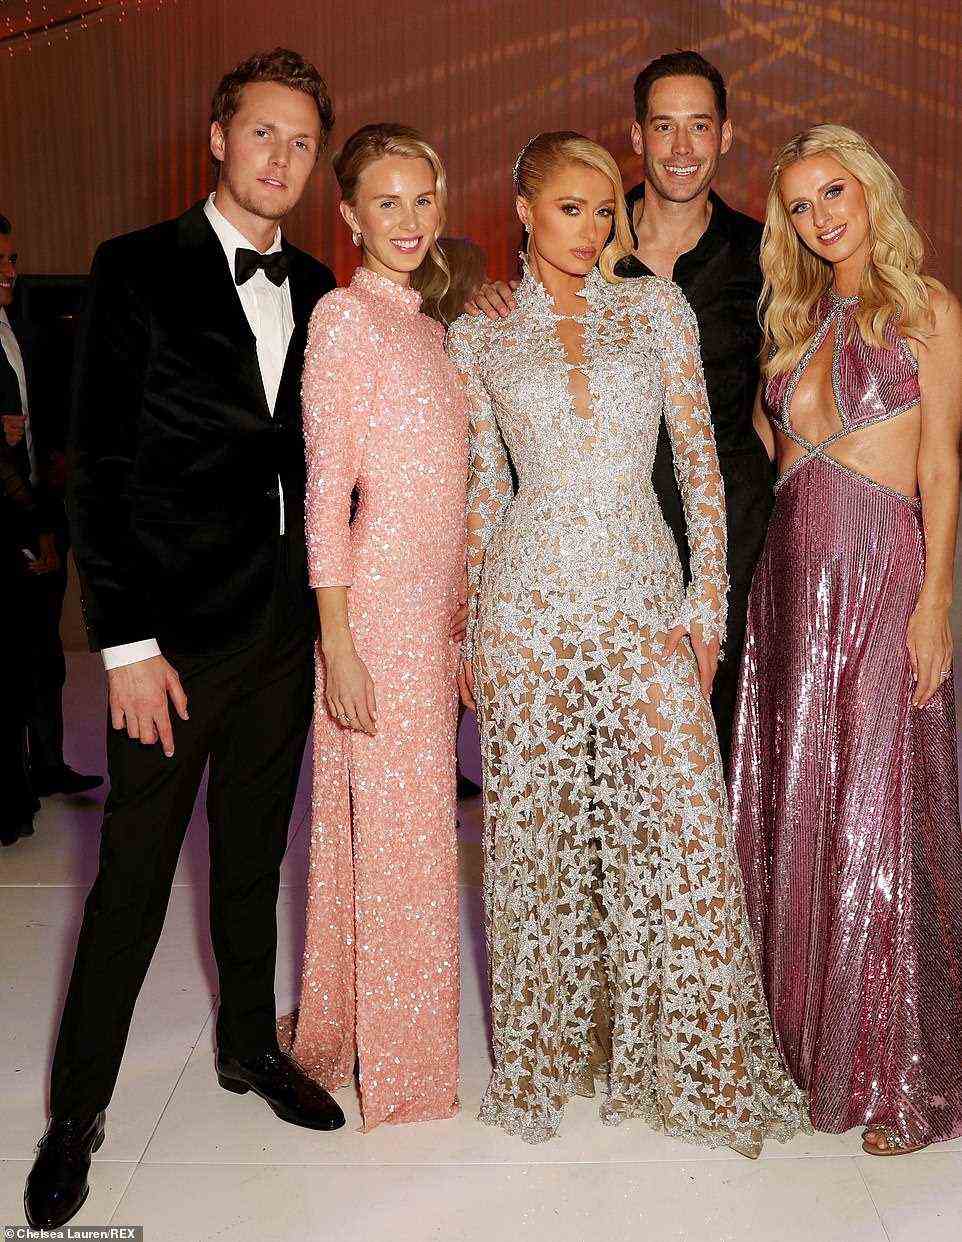 Pictured (L-R): Barron Hilton, Tessa Hilton, Paris Hilton, Carter Reum and Nicky Hilton Rothschild